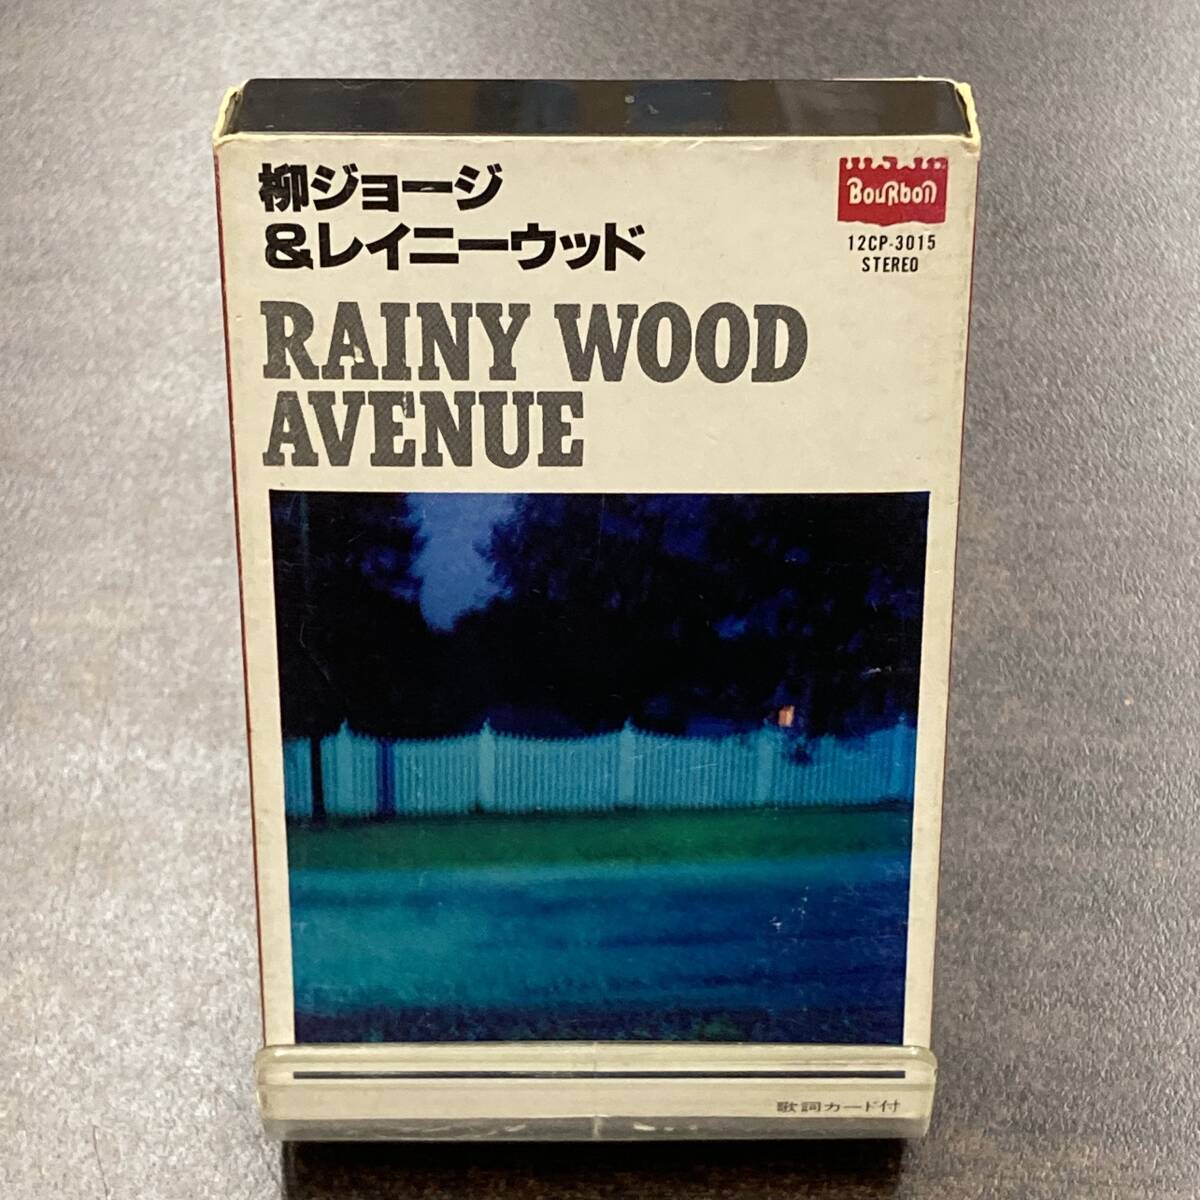 1186M 柳ジョージ＆レイニーウッド RAINY WOOD AVENUE カセットテープ / George Yanagi ＆ RAINY WOOD Citypop Cassette Tapeの画像1